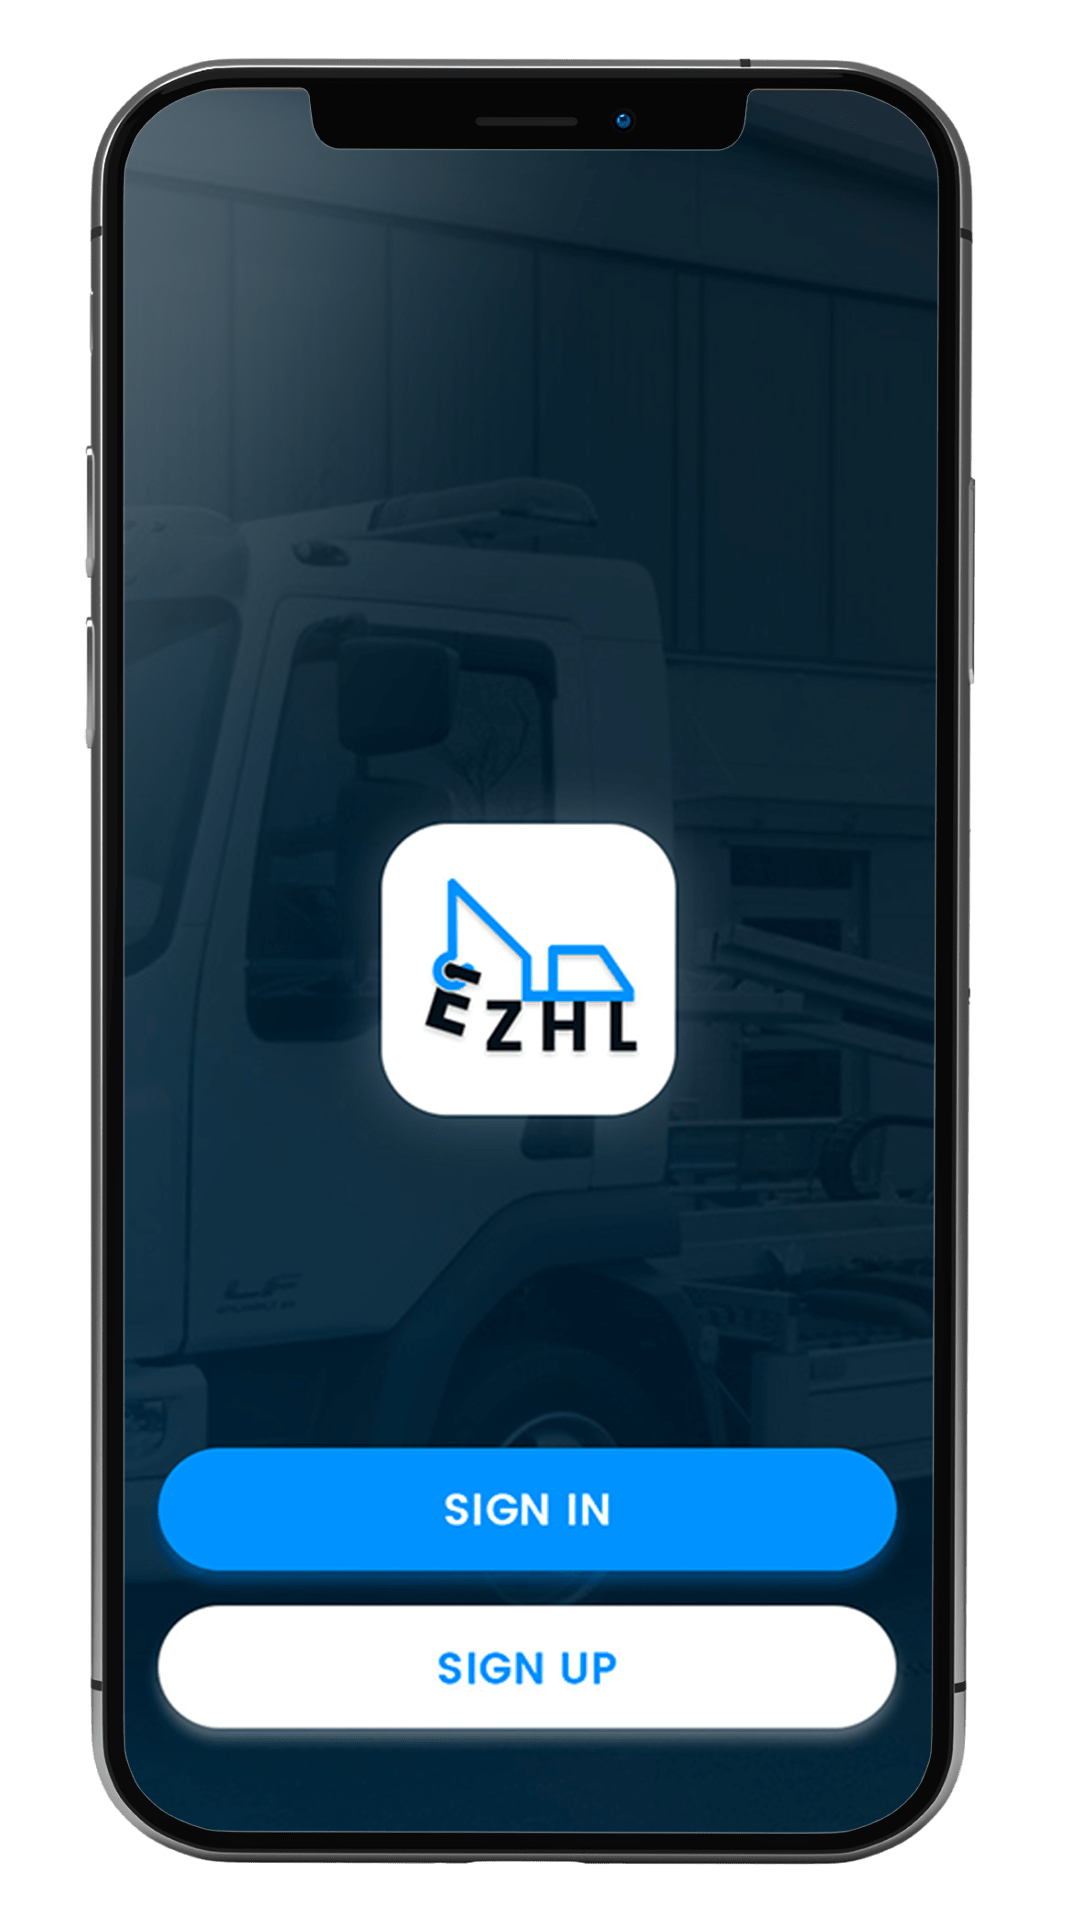 Ezhl App - Home Screen